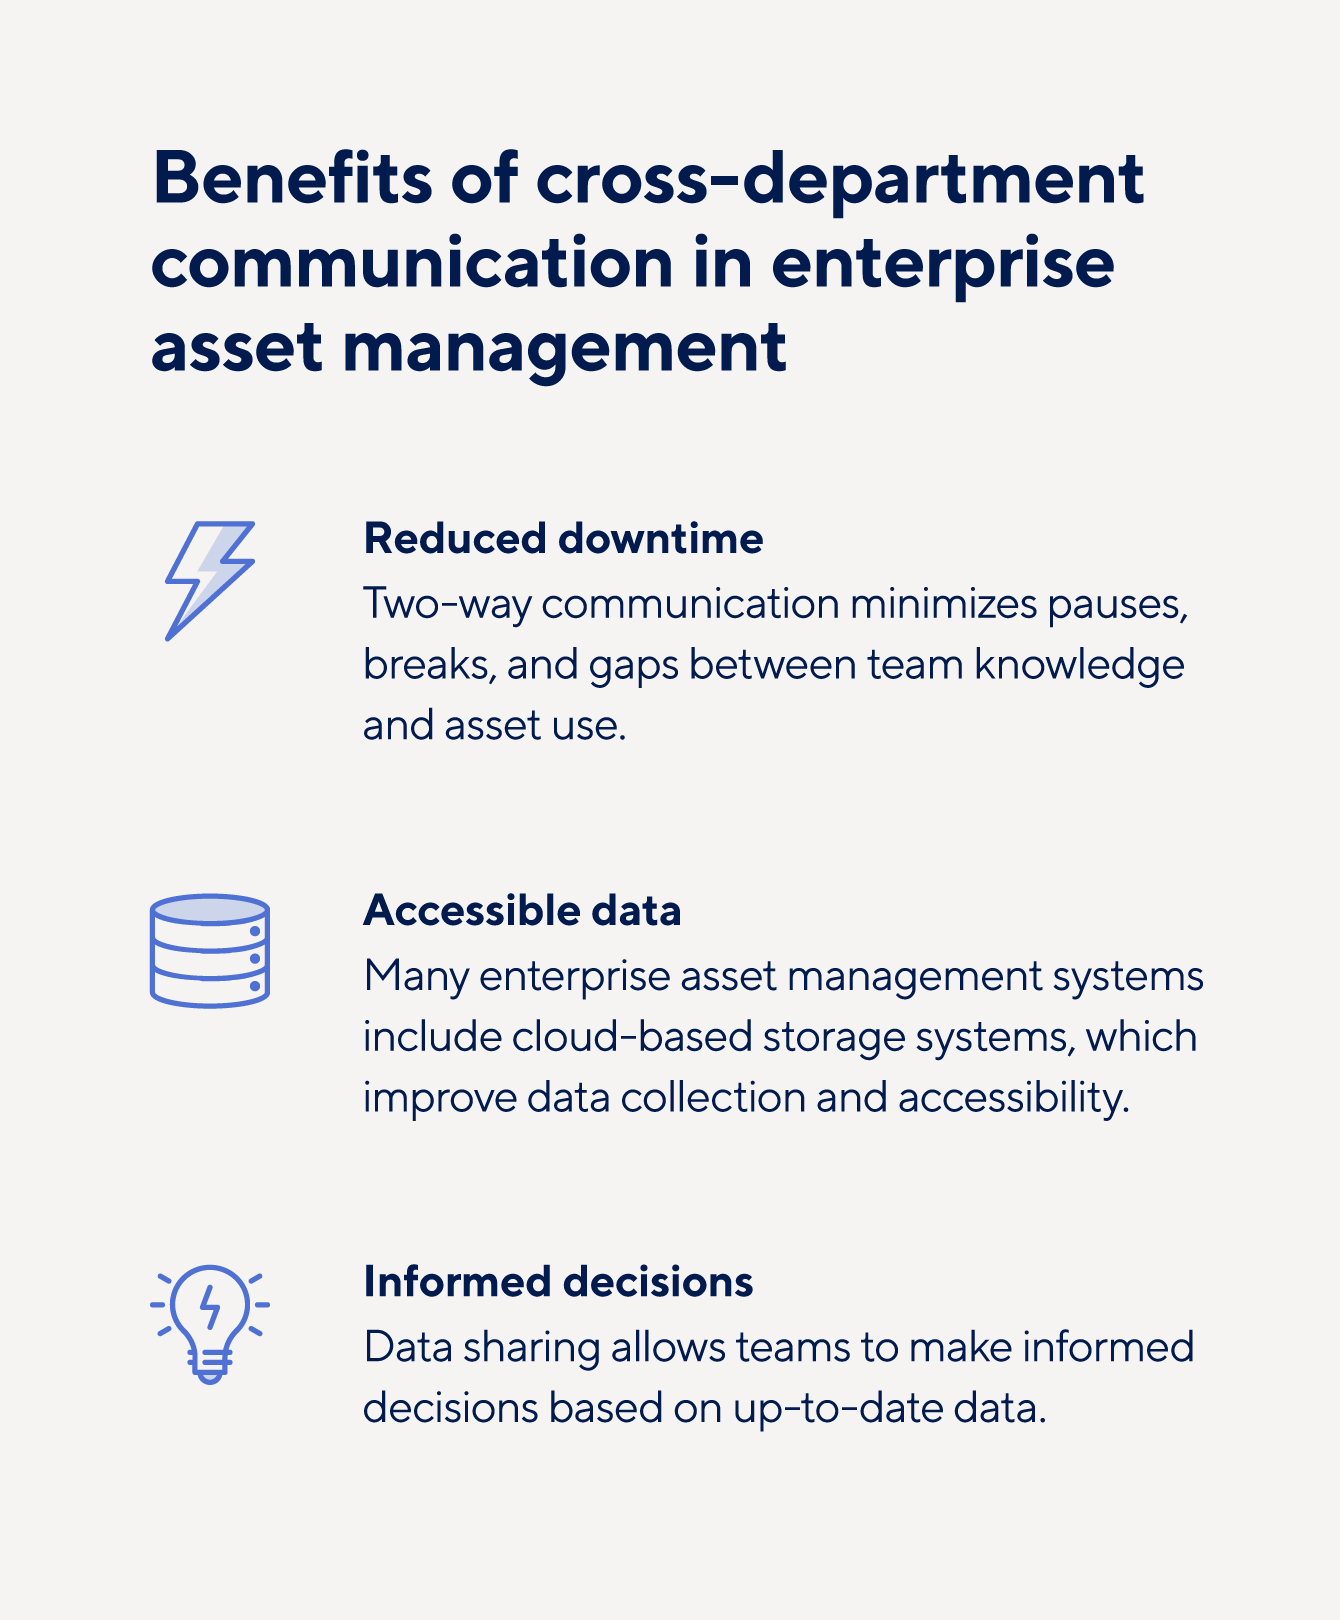 Benefits of cross-department communication in enterprise asset management